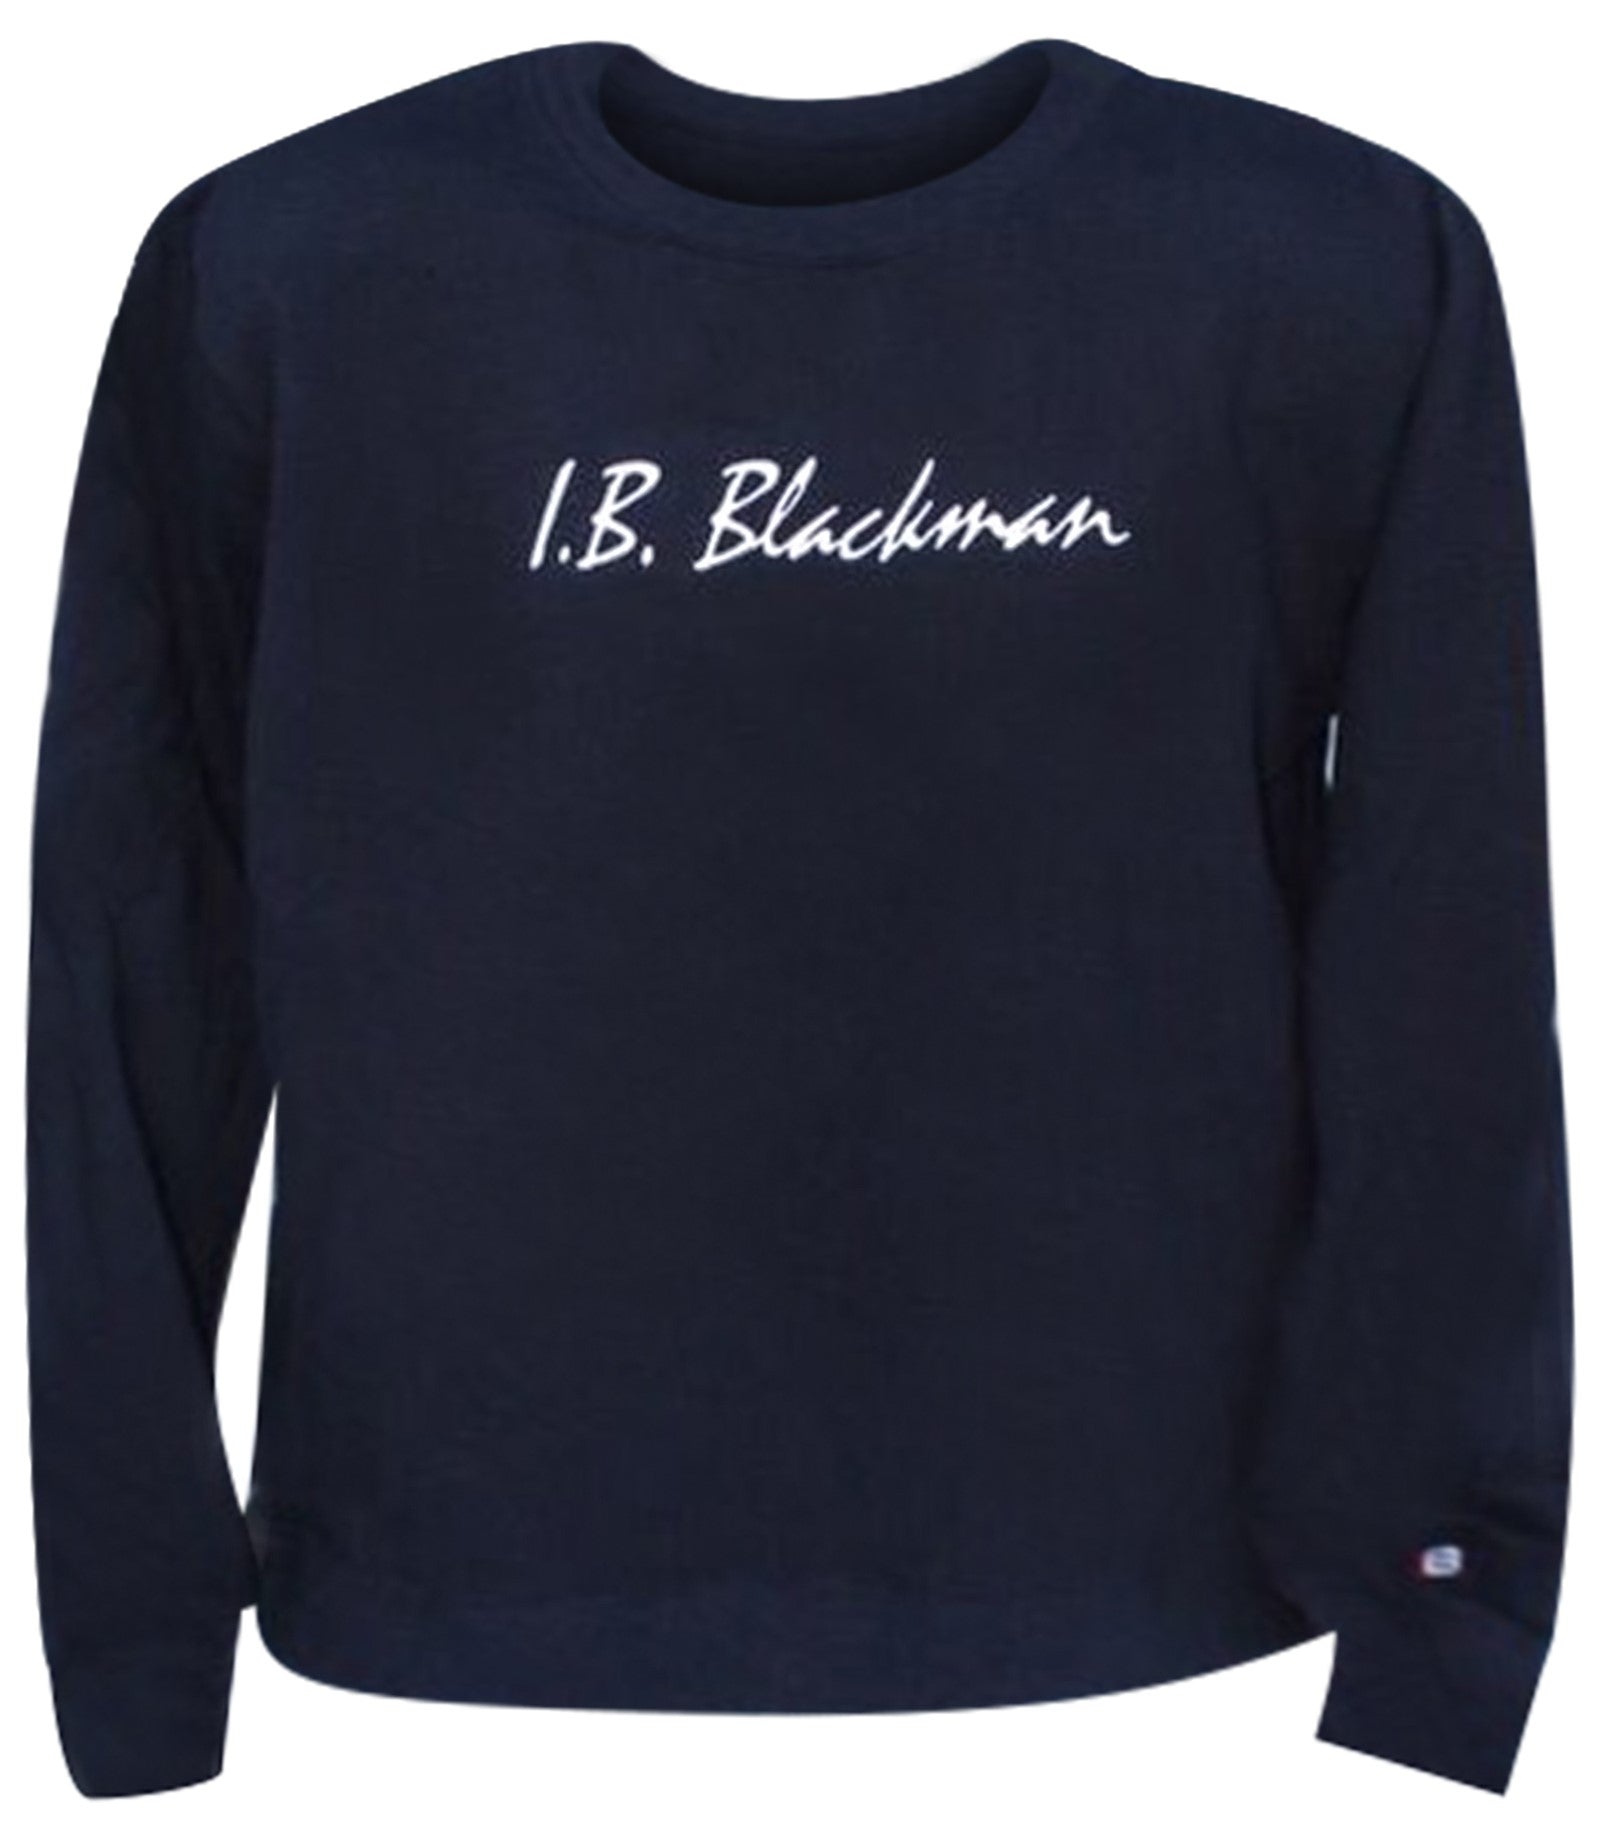 Classic Sweatshirt – I.B. Blackman